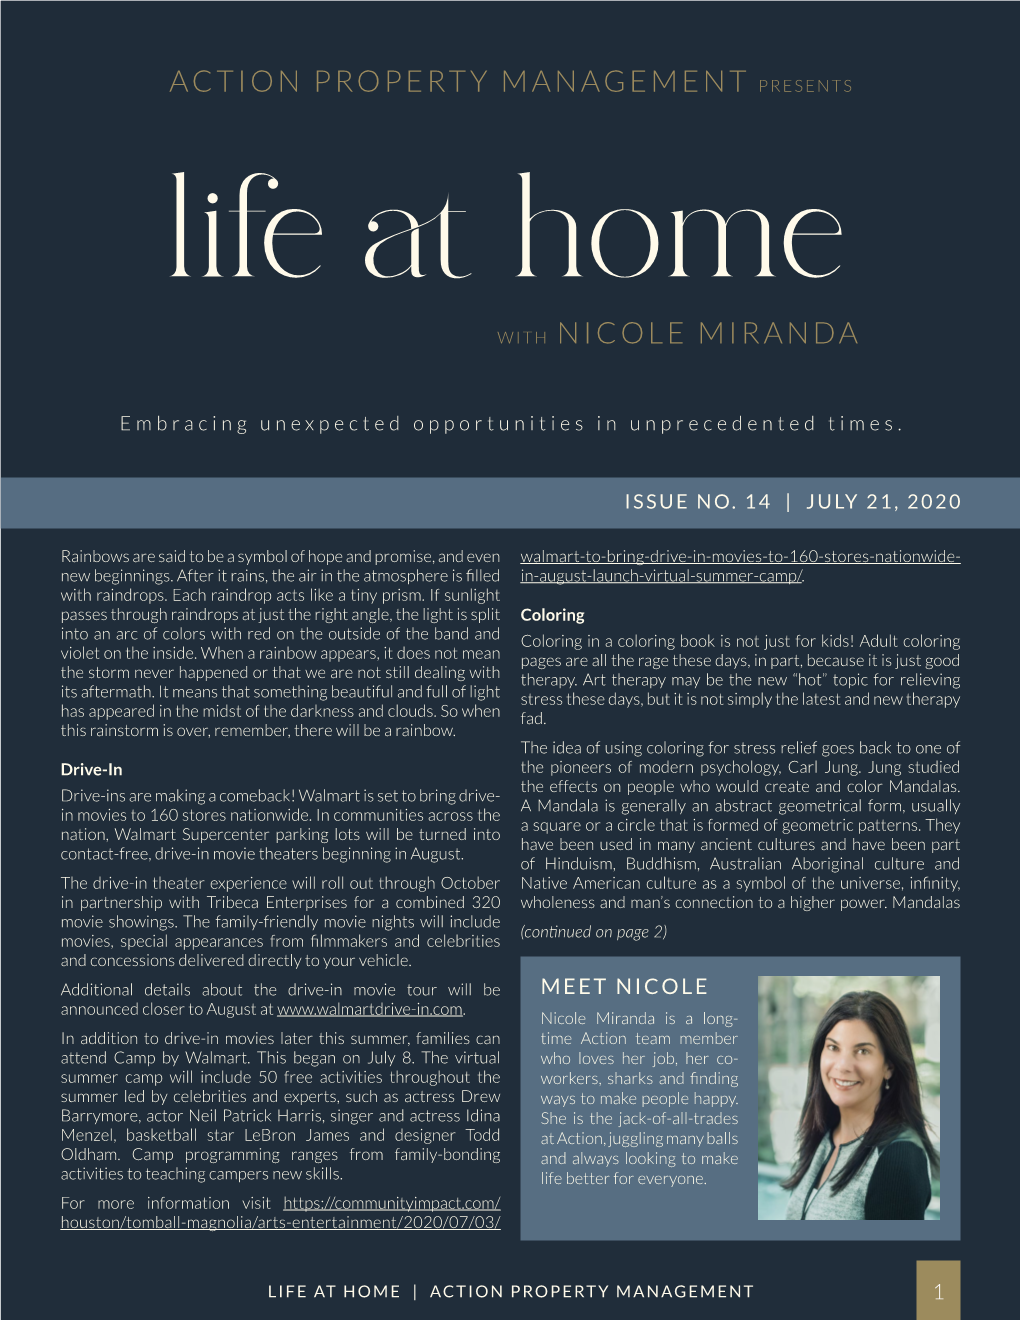 Action Property Management Presents with Nicole Miranda